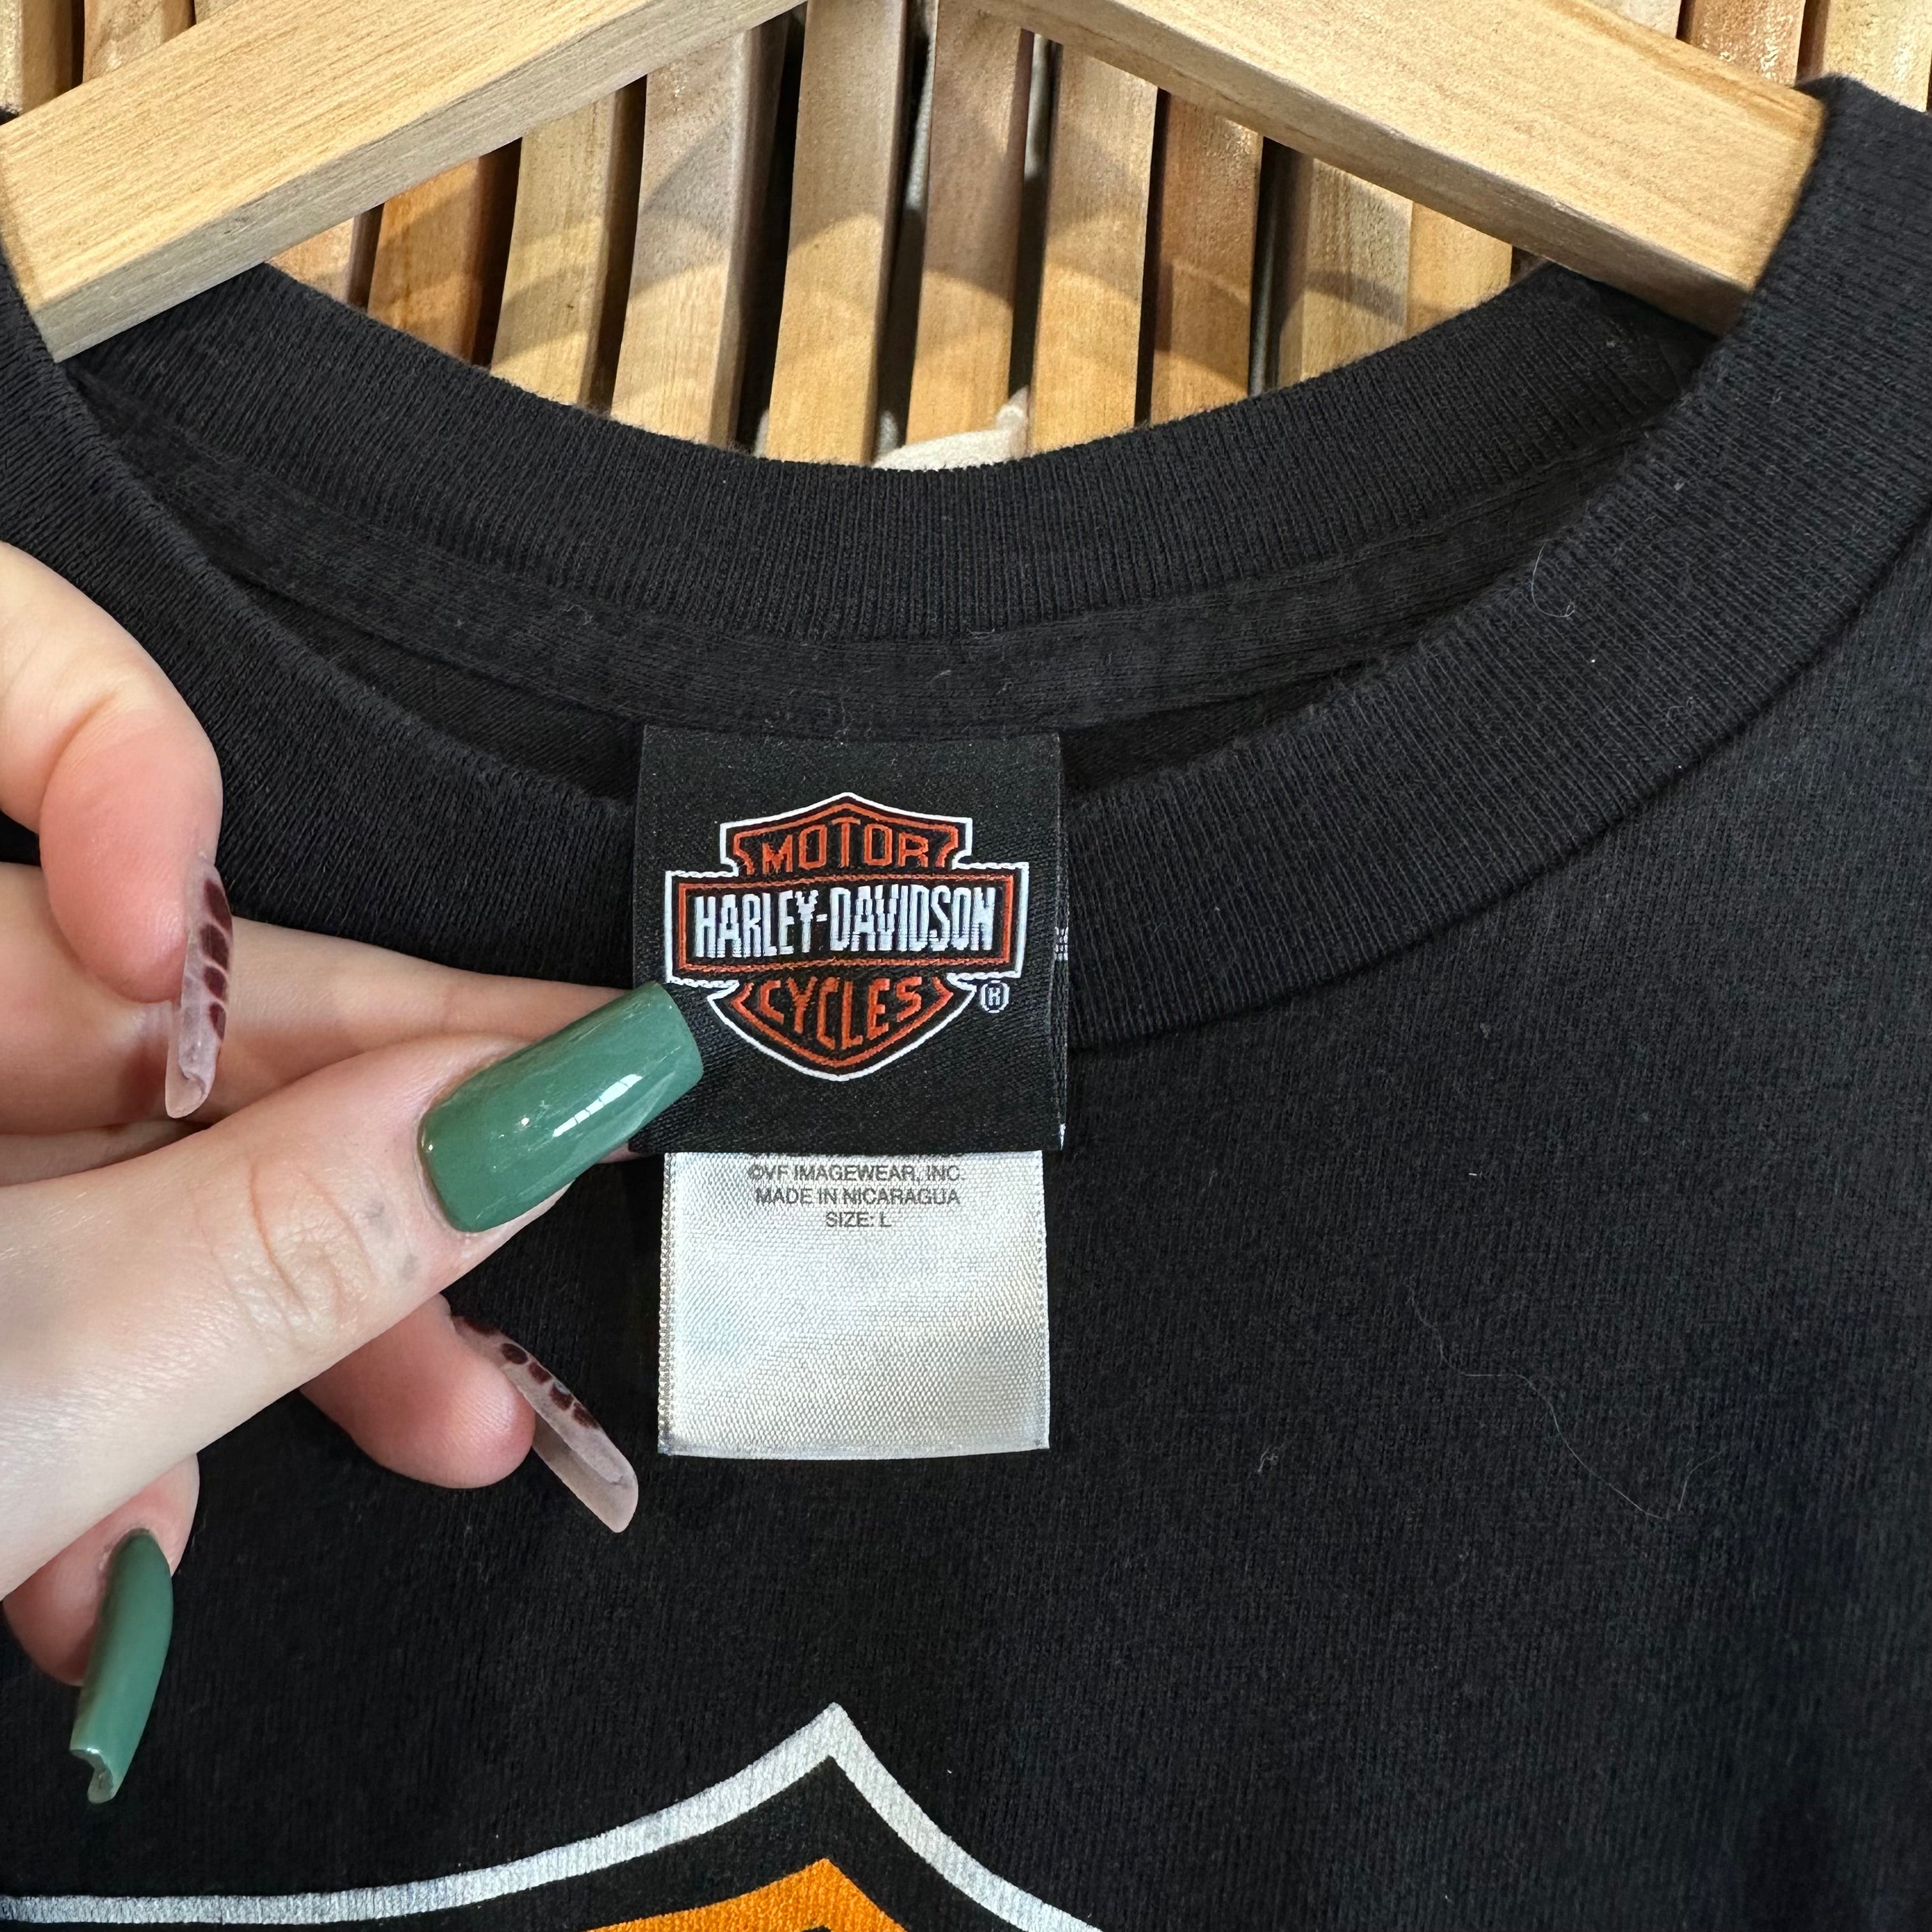 Harley Davidson Crest/Viking Twin Cities, MN T-Shirt